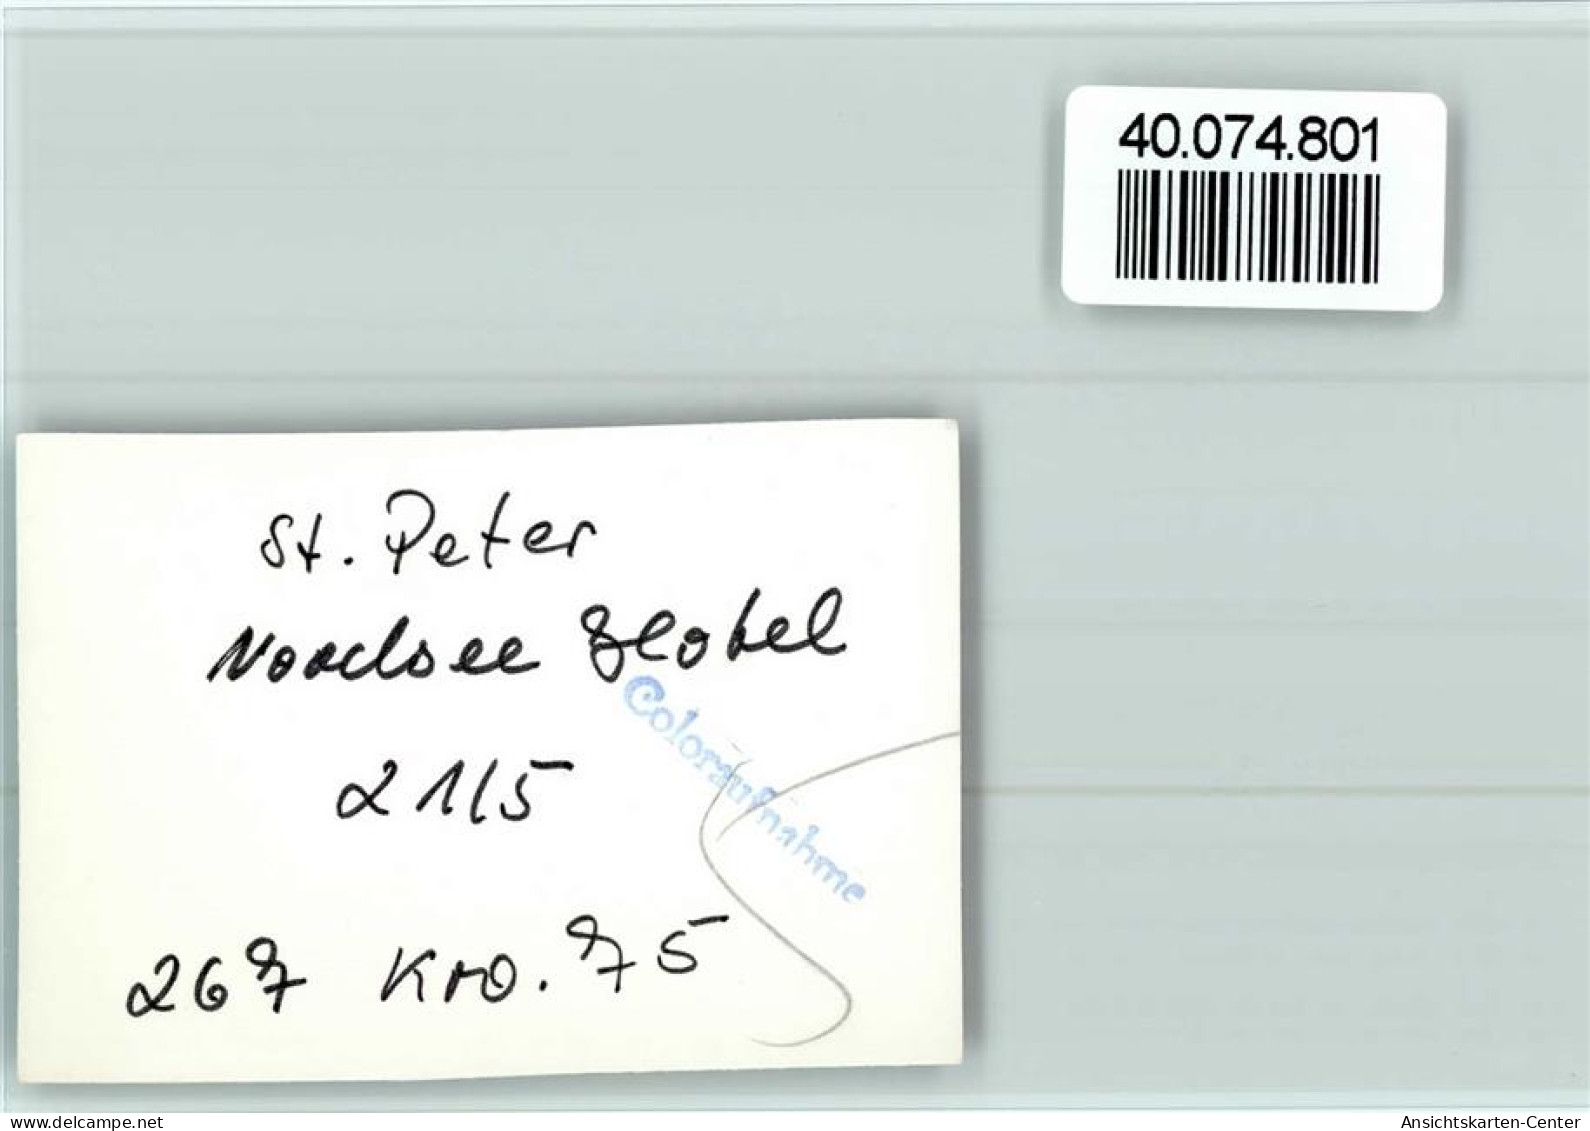 40074801 - St Peter-Ording - St. Peter-Ording